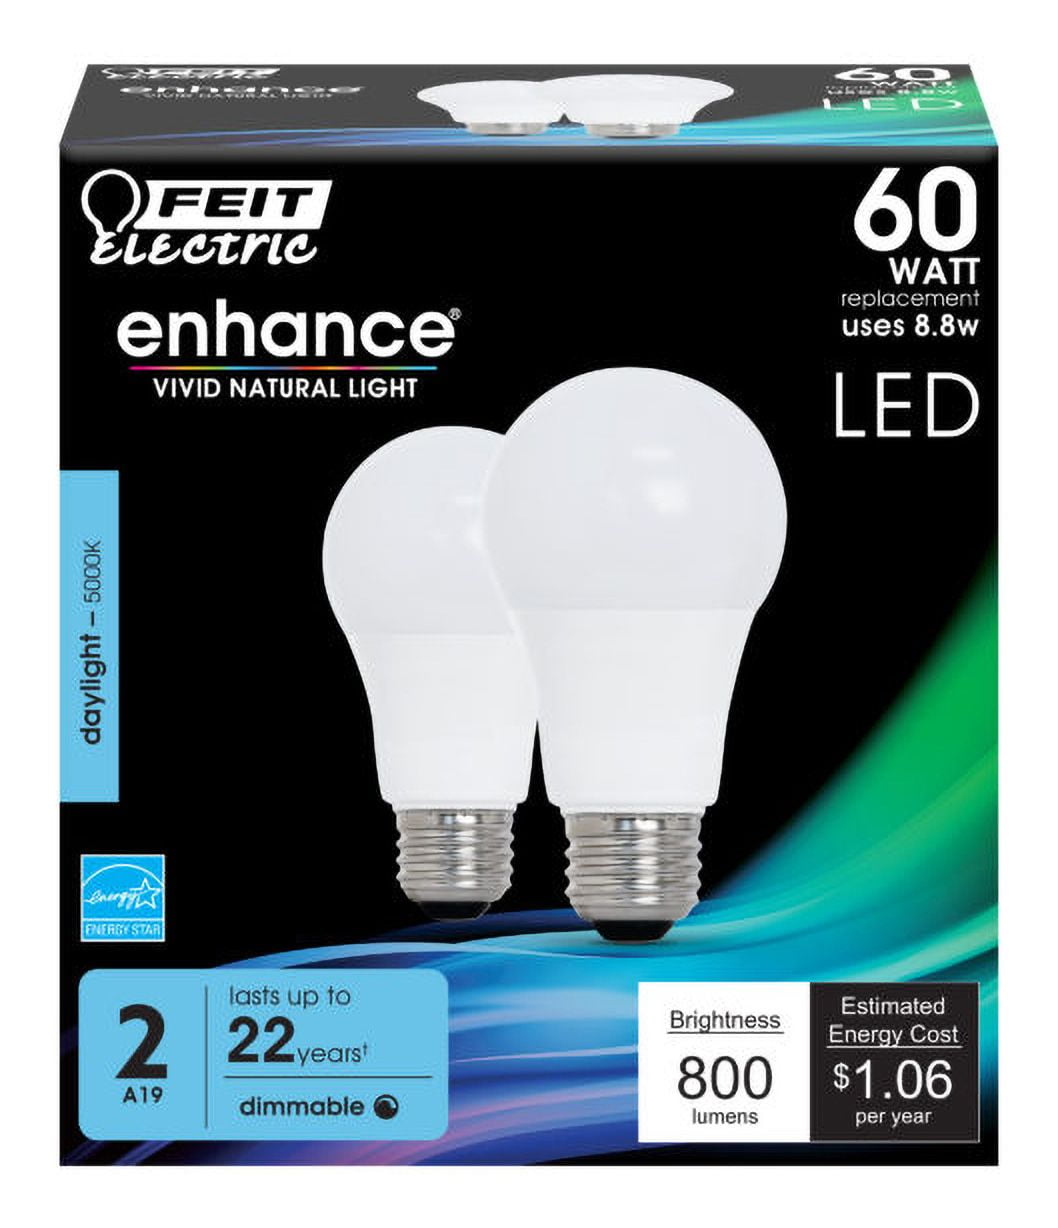 10 LED 60W Light Bulbs Daylight 5000K 800 Lumens Feit Electric A19 Enhance Vivid 